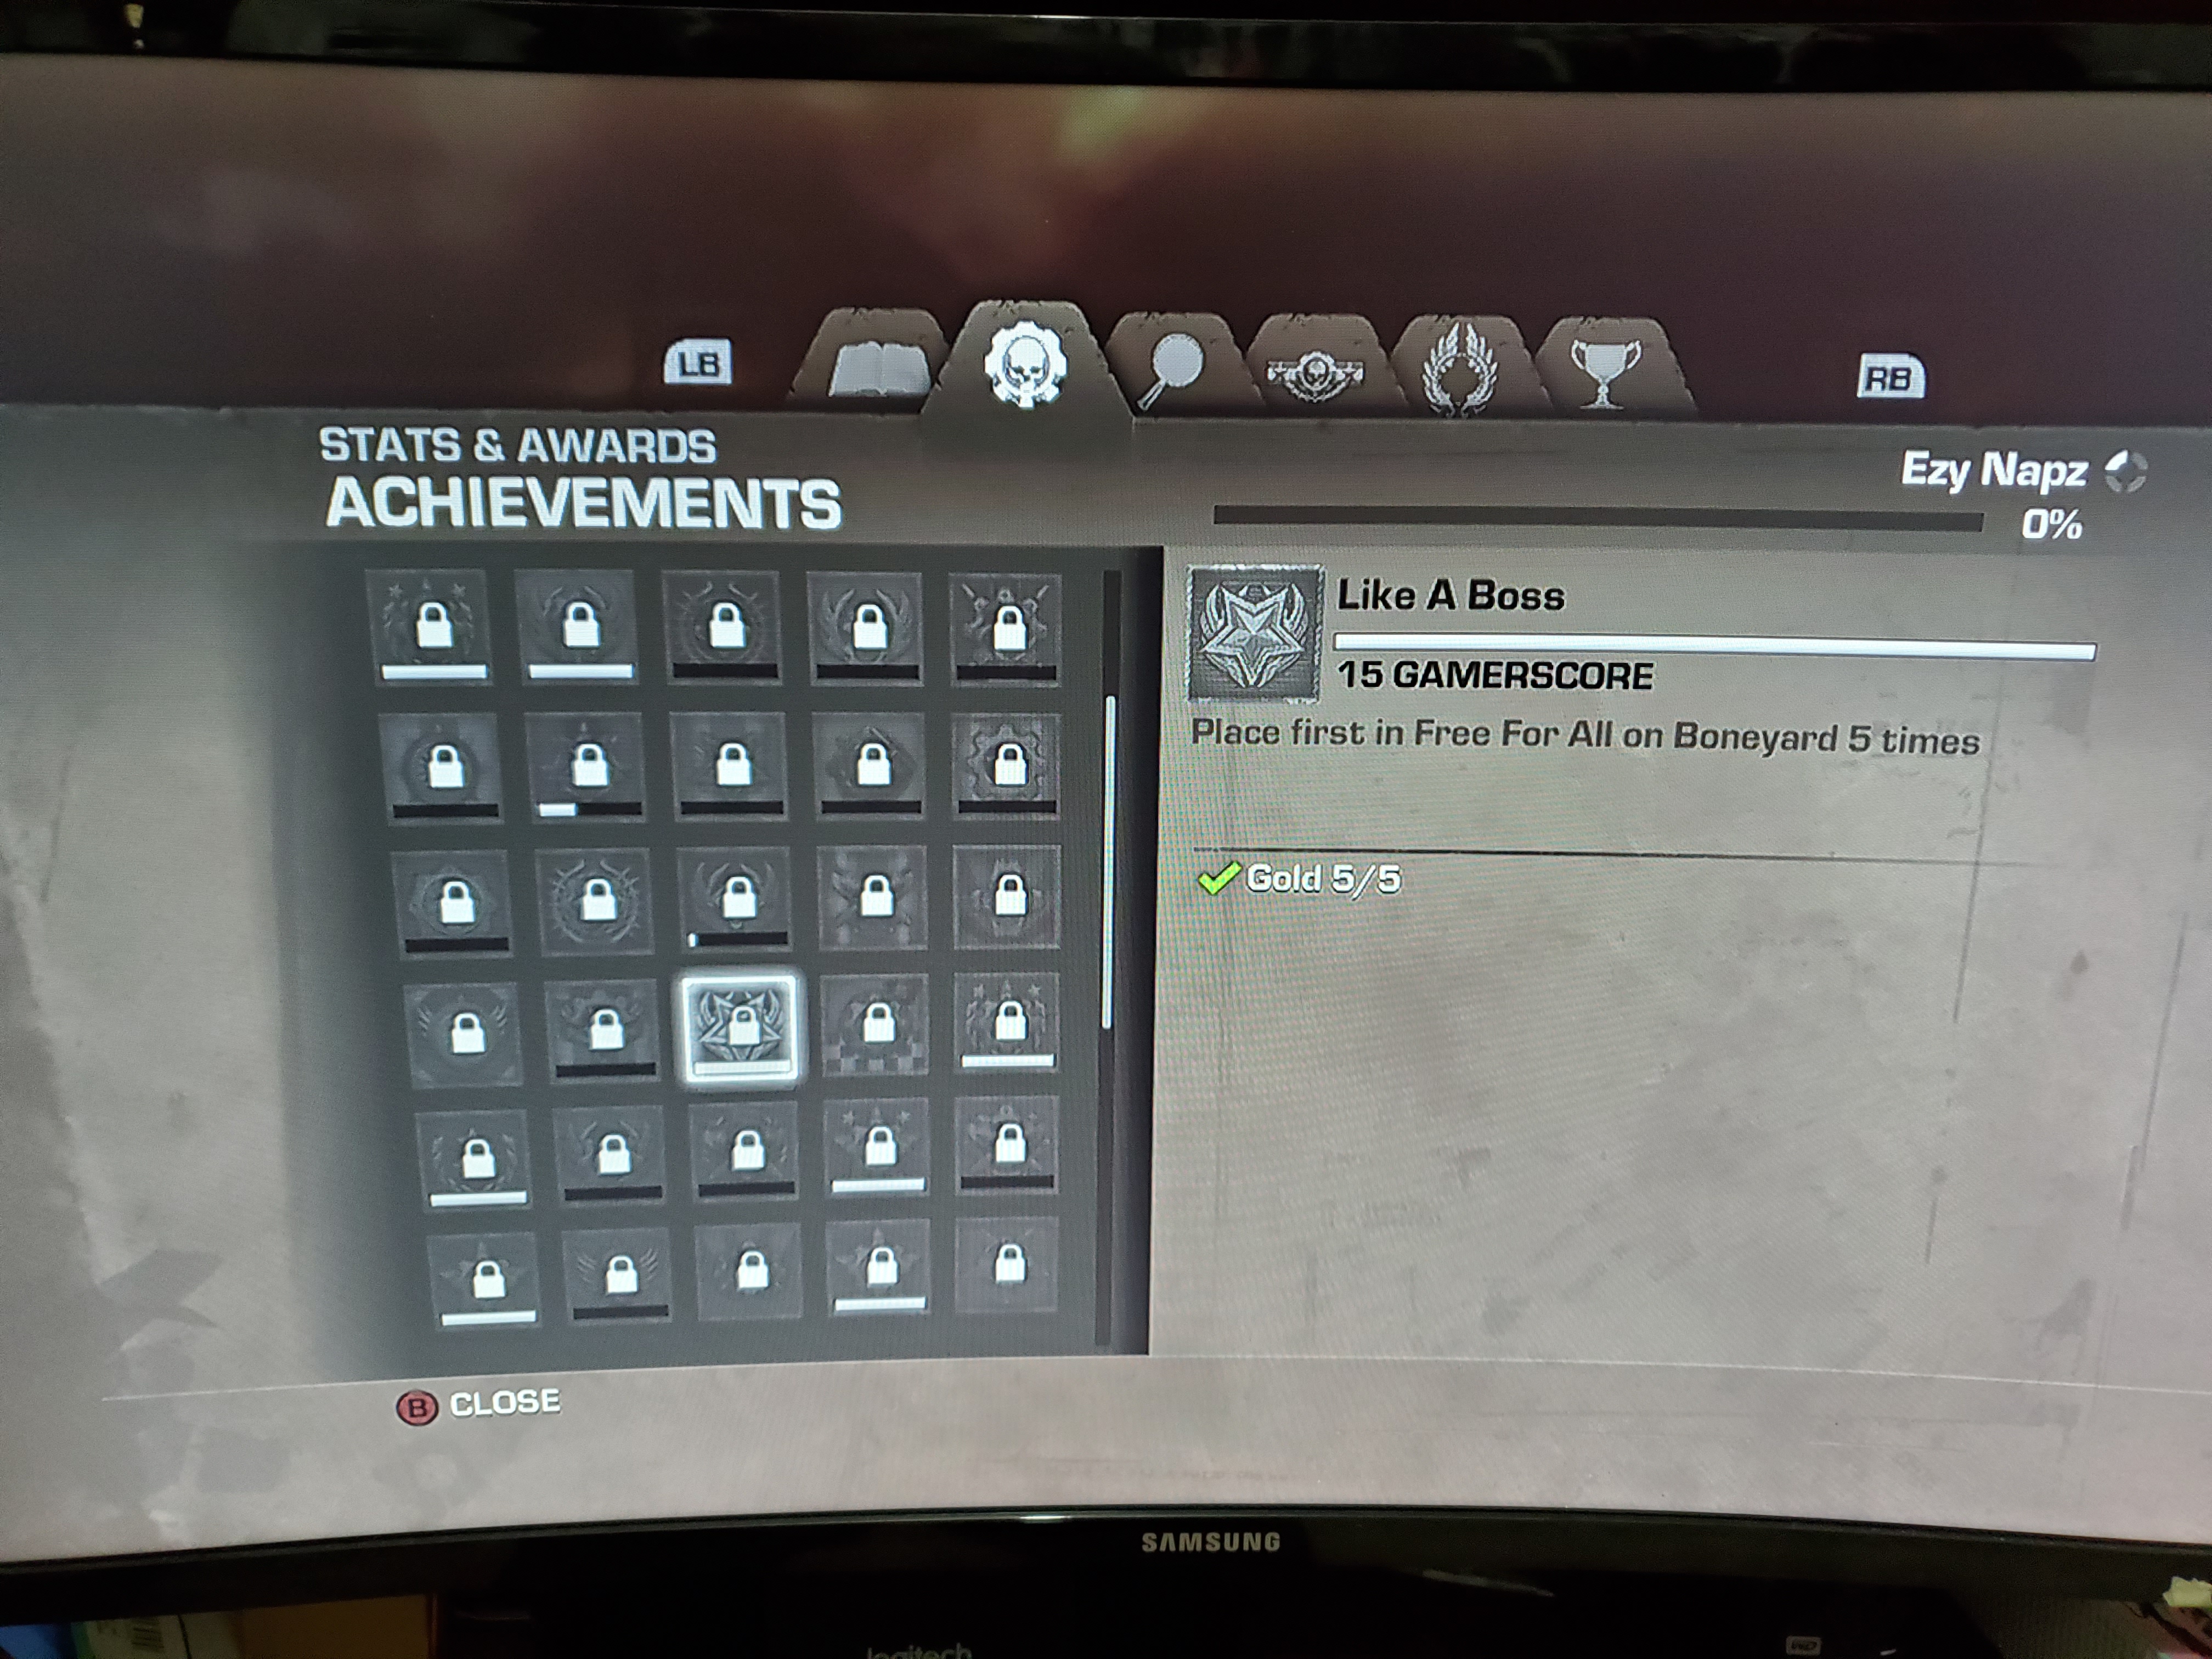 Gears of War: Judgment Achievements